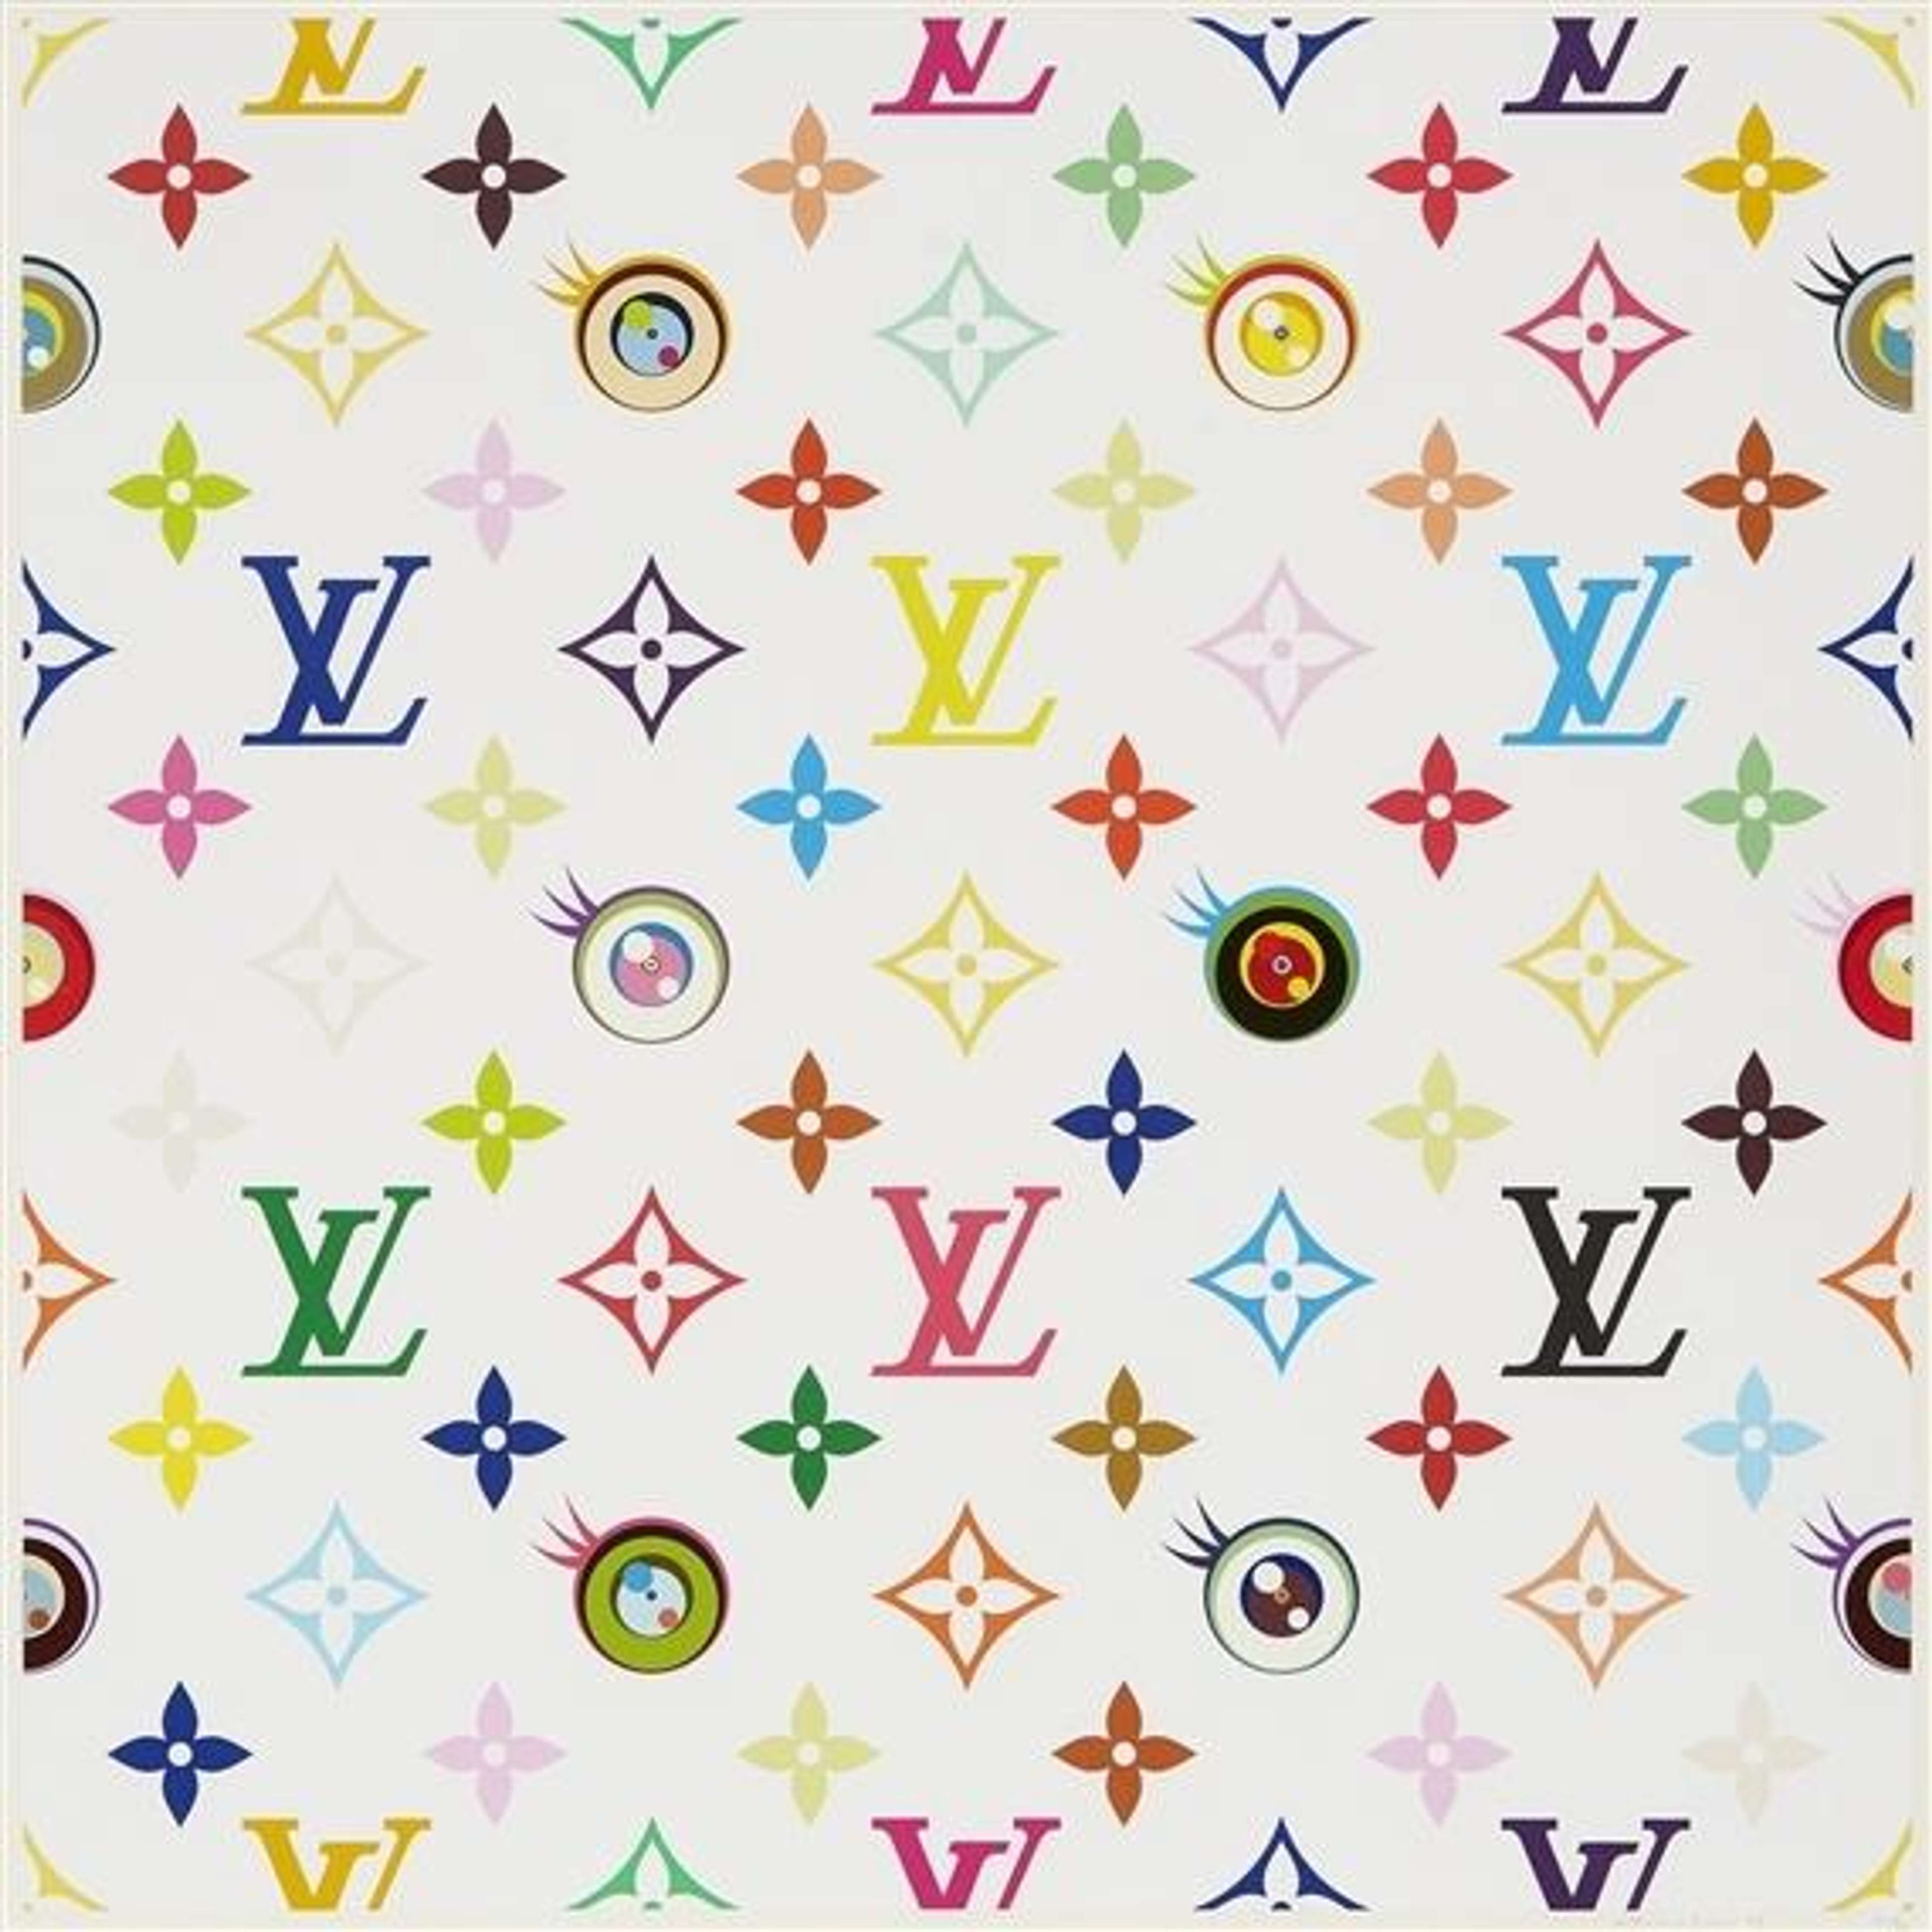 Takashi Murakami’s Louis Vuitton Eye Love Superflat. A screenprint of a multicoloured Louis Vuitton monogram logo with animated eyes against a white background.